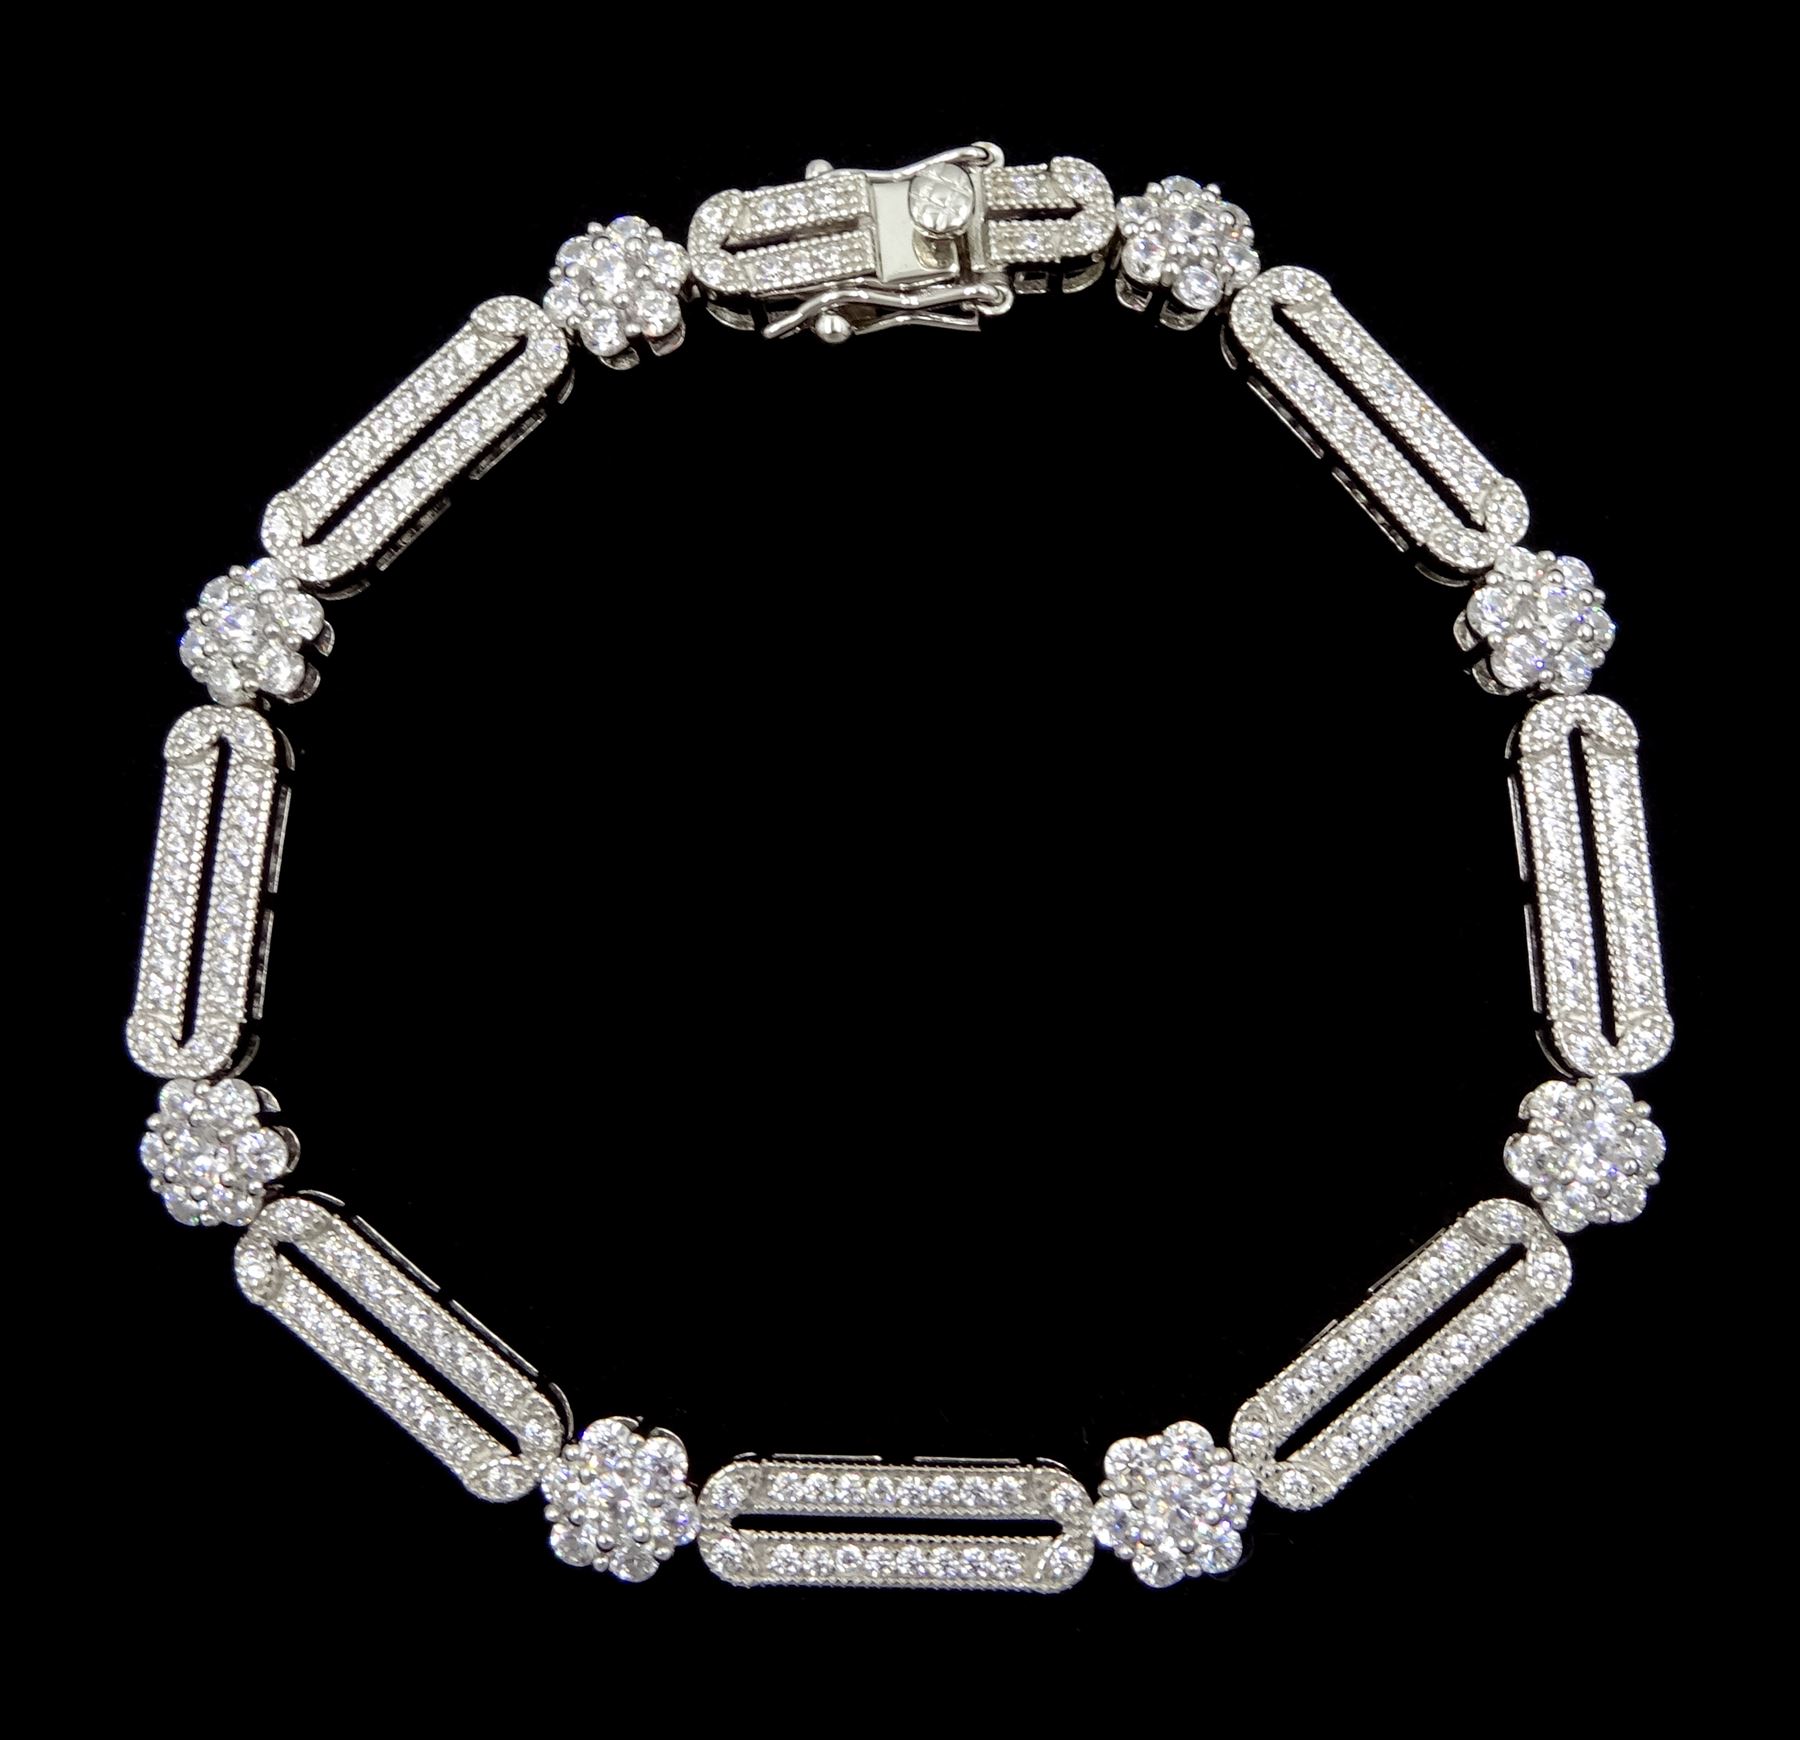 Silver Art Deco style cubic zirconia openwork flower link bracelet